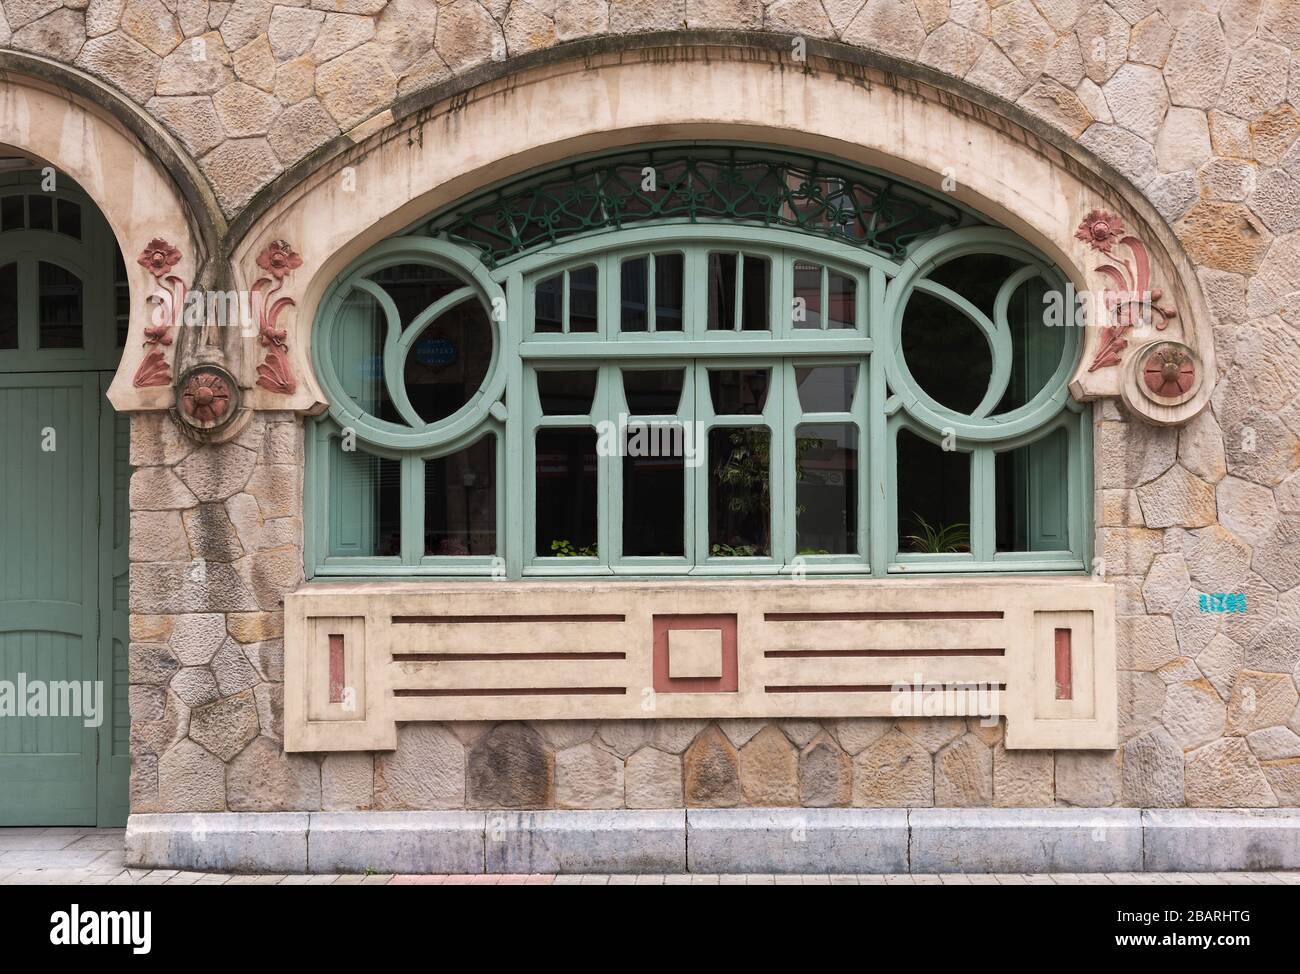 Ventana art nouveau en el casco antiguo de Bilbao, España Foto de stock